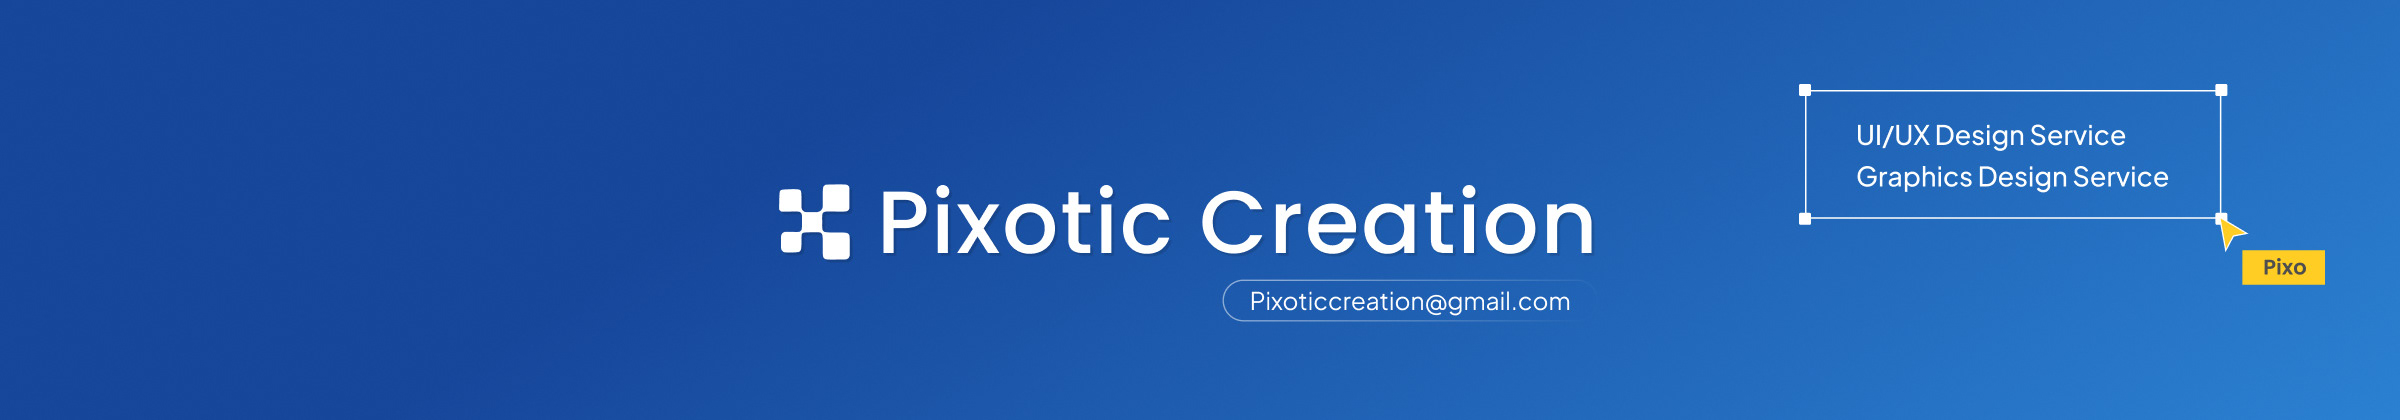 Pixotic Creation's profile banner